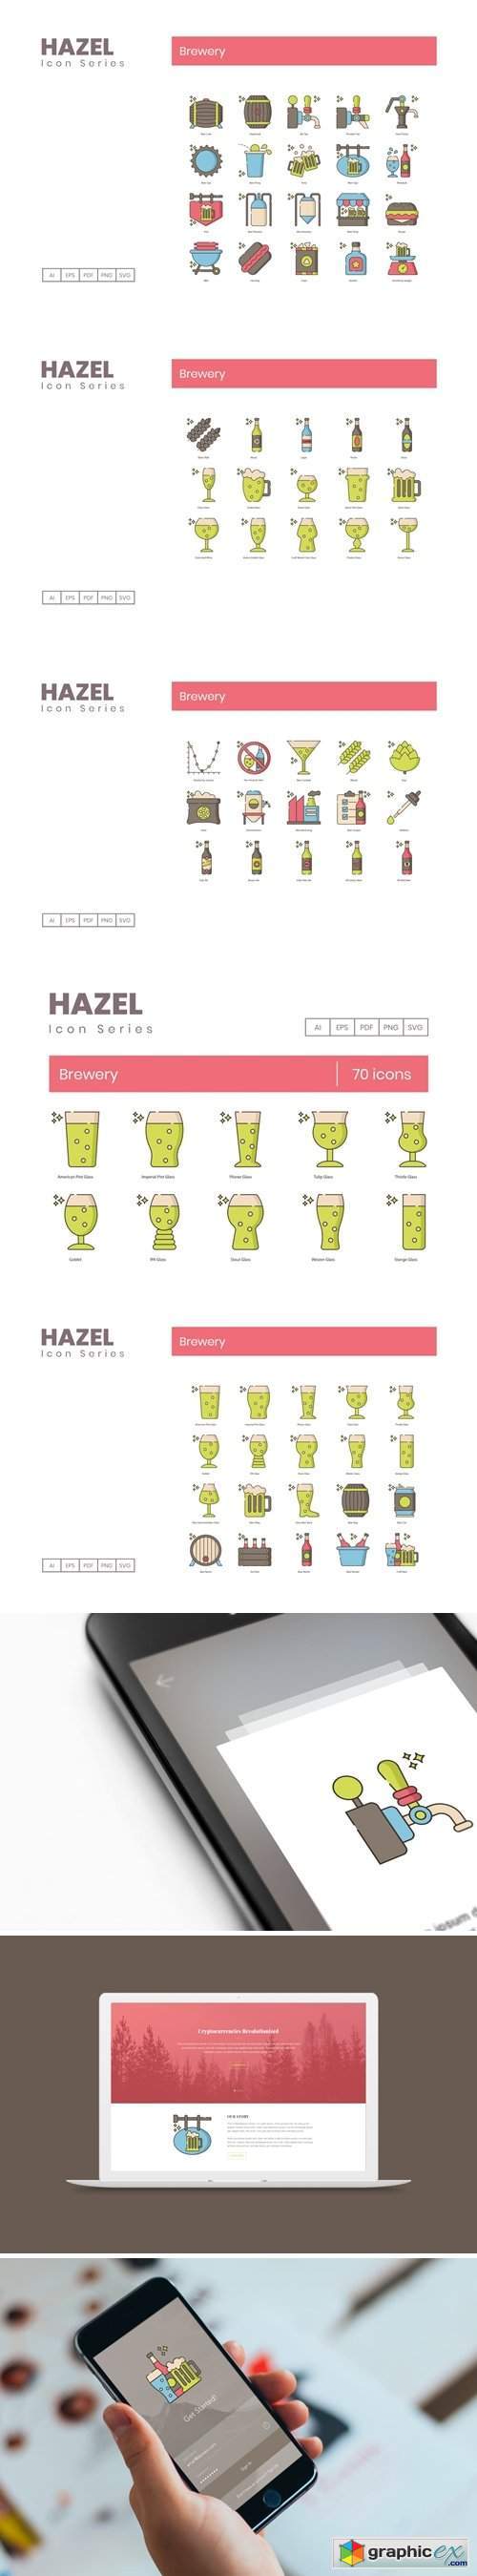 70 Brewery Icons | Hazel Series